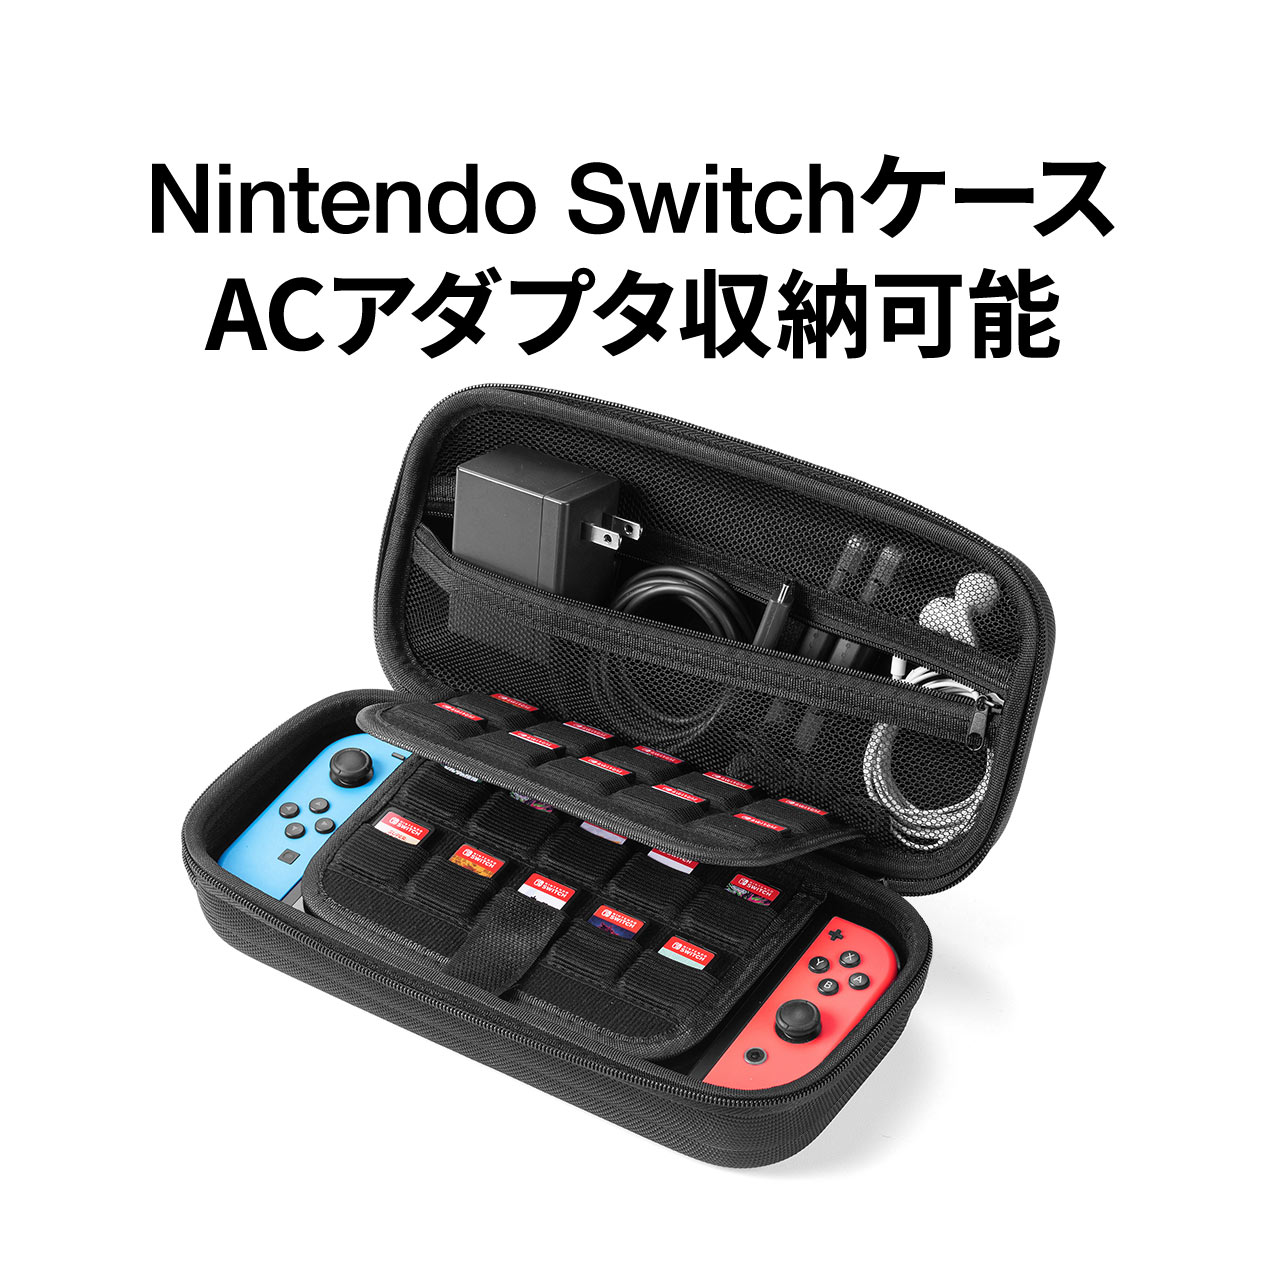 Nintendo Switch ケース スイッチ 大容量 大型 アダプタ 収納 Lite ライト ニンテンドー セミハードケース ゲームカード20枚収納 取っ手付き